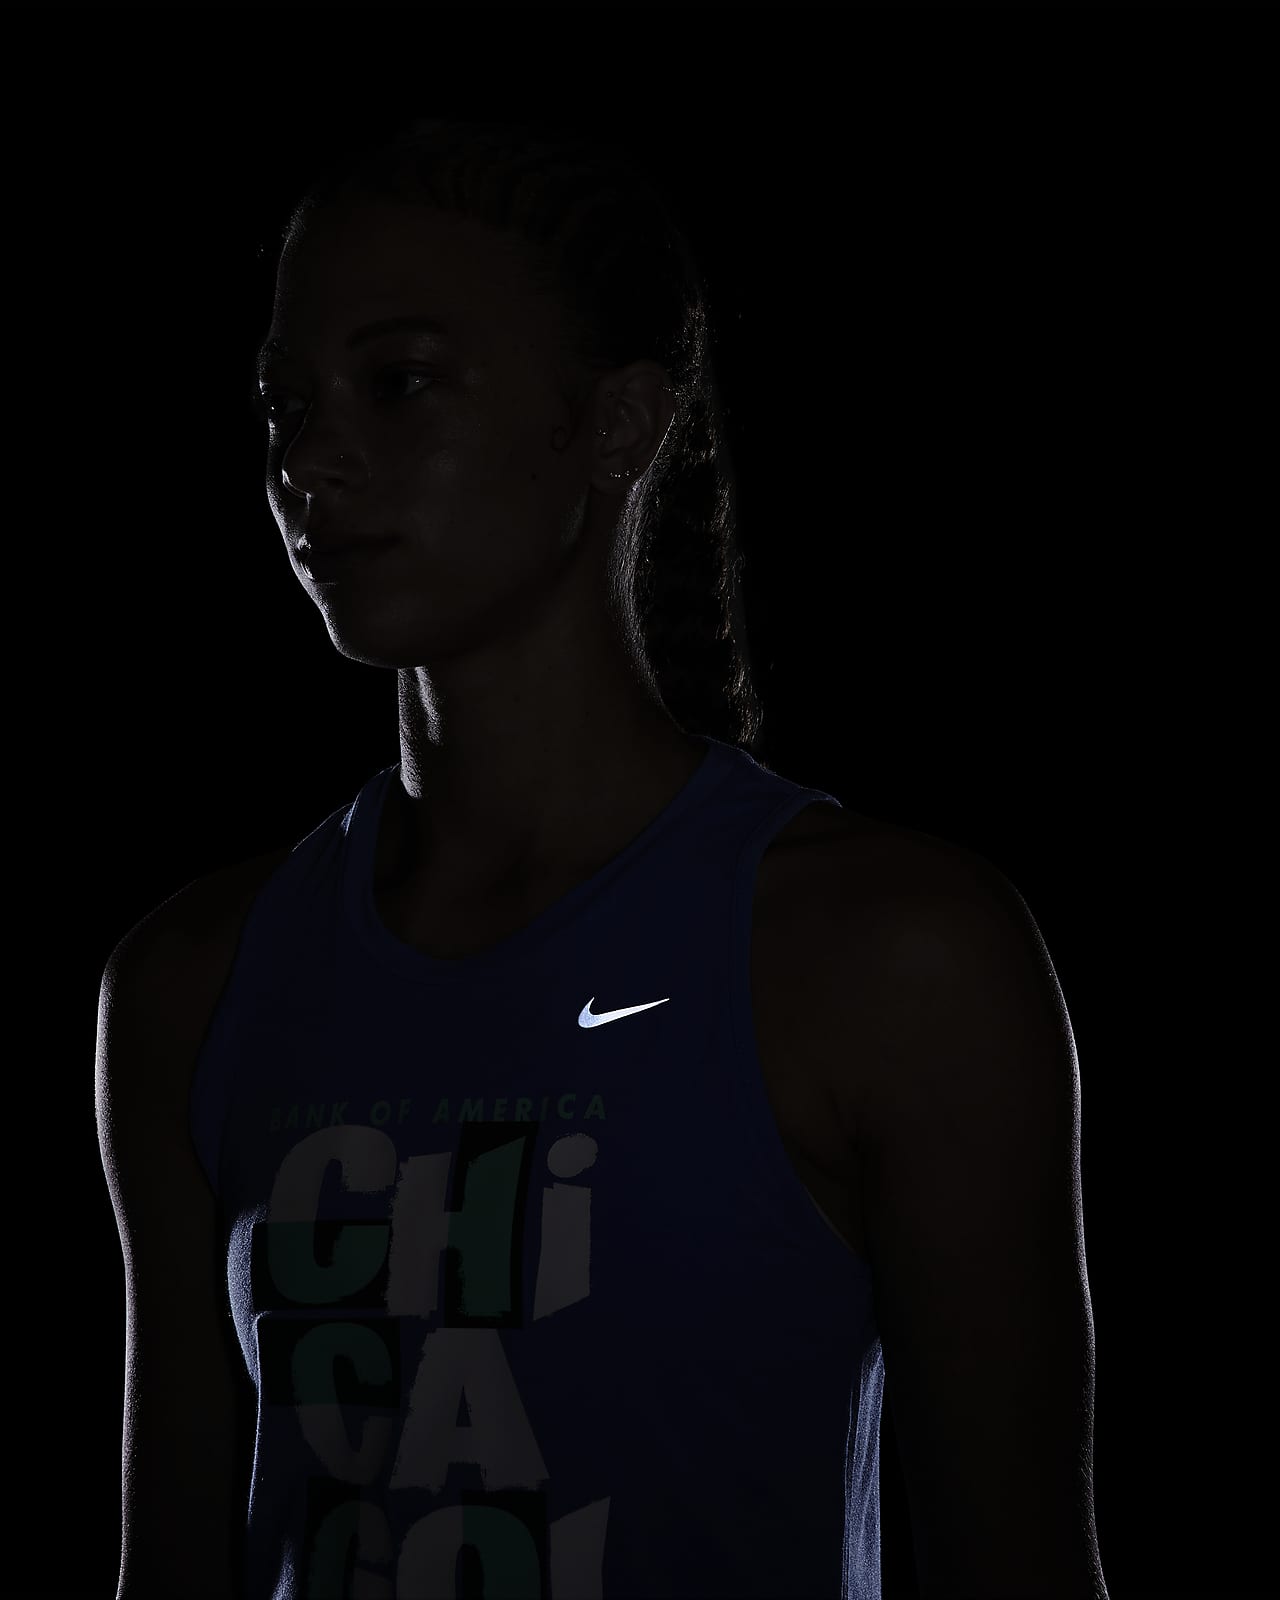 Women's top Nike Dri-Fit One Slim Tank - fireberry/white, Tennis Zone